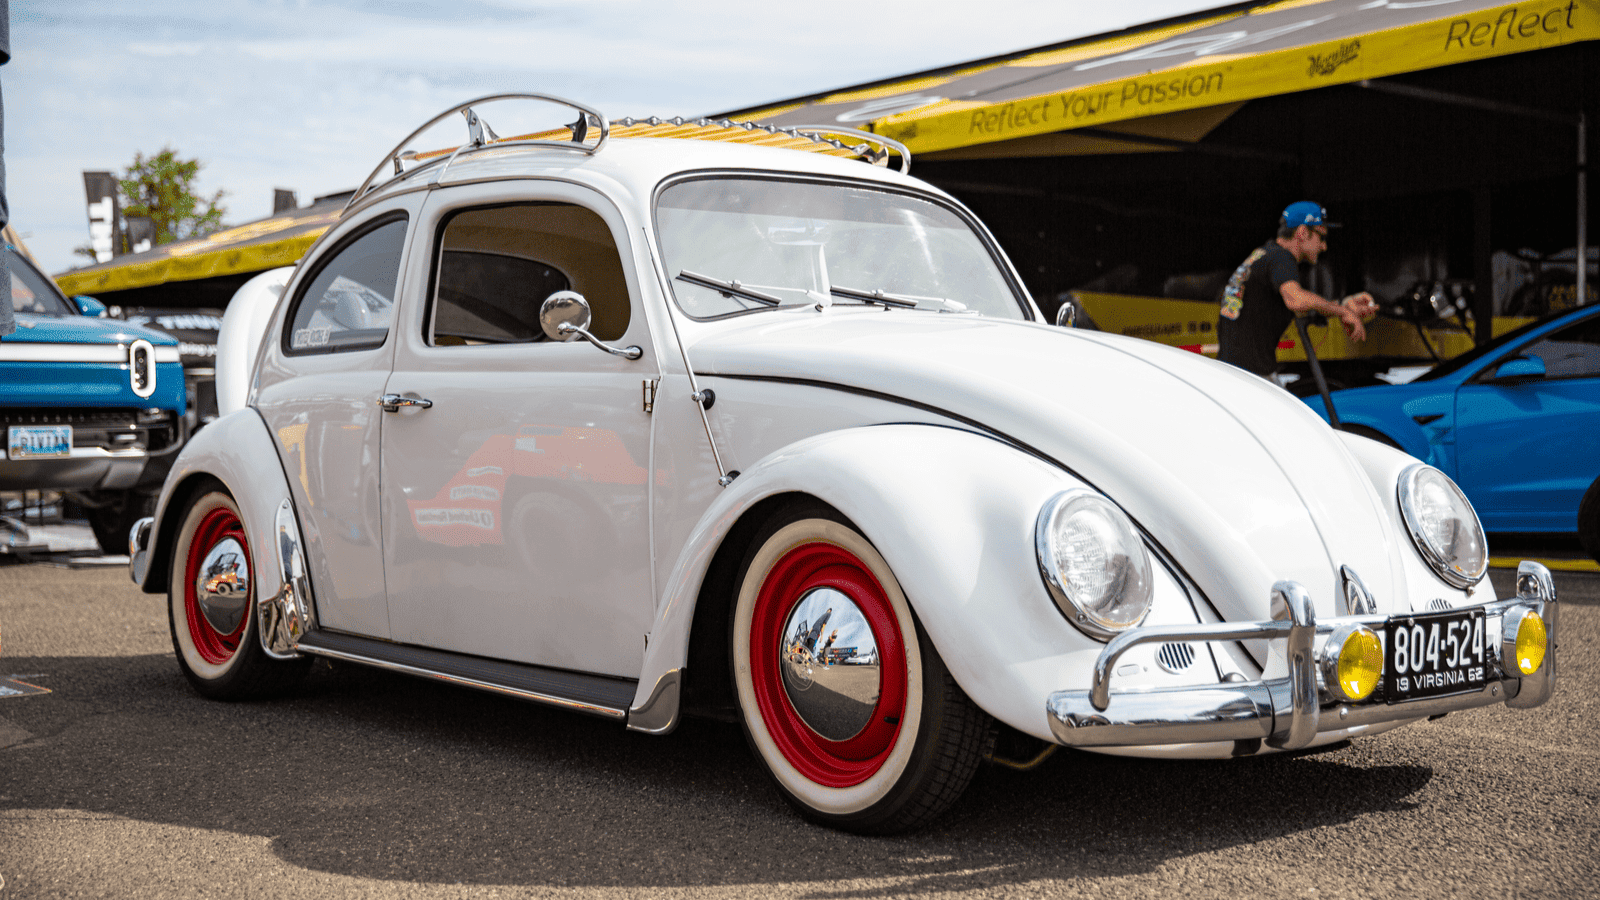 Photo of Blake Rhodes' Innovative Electrified 1962 VW Beetle at Electrify Showoff in Washington, DC